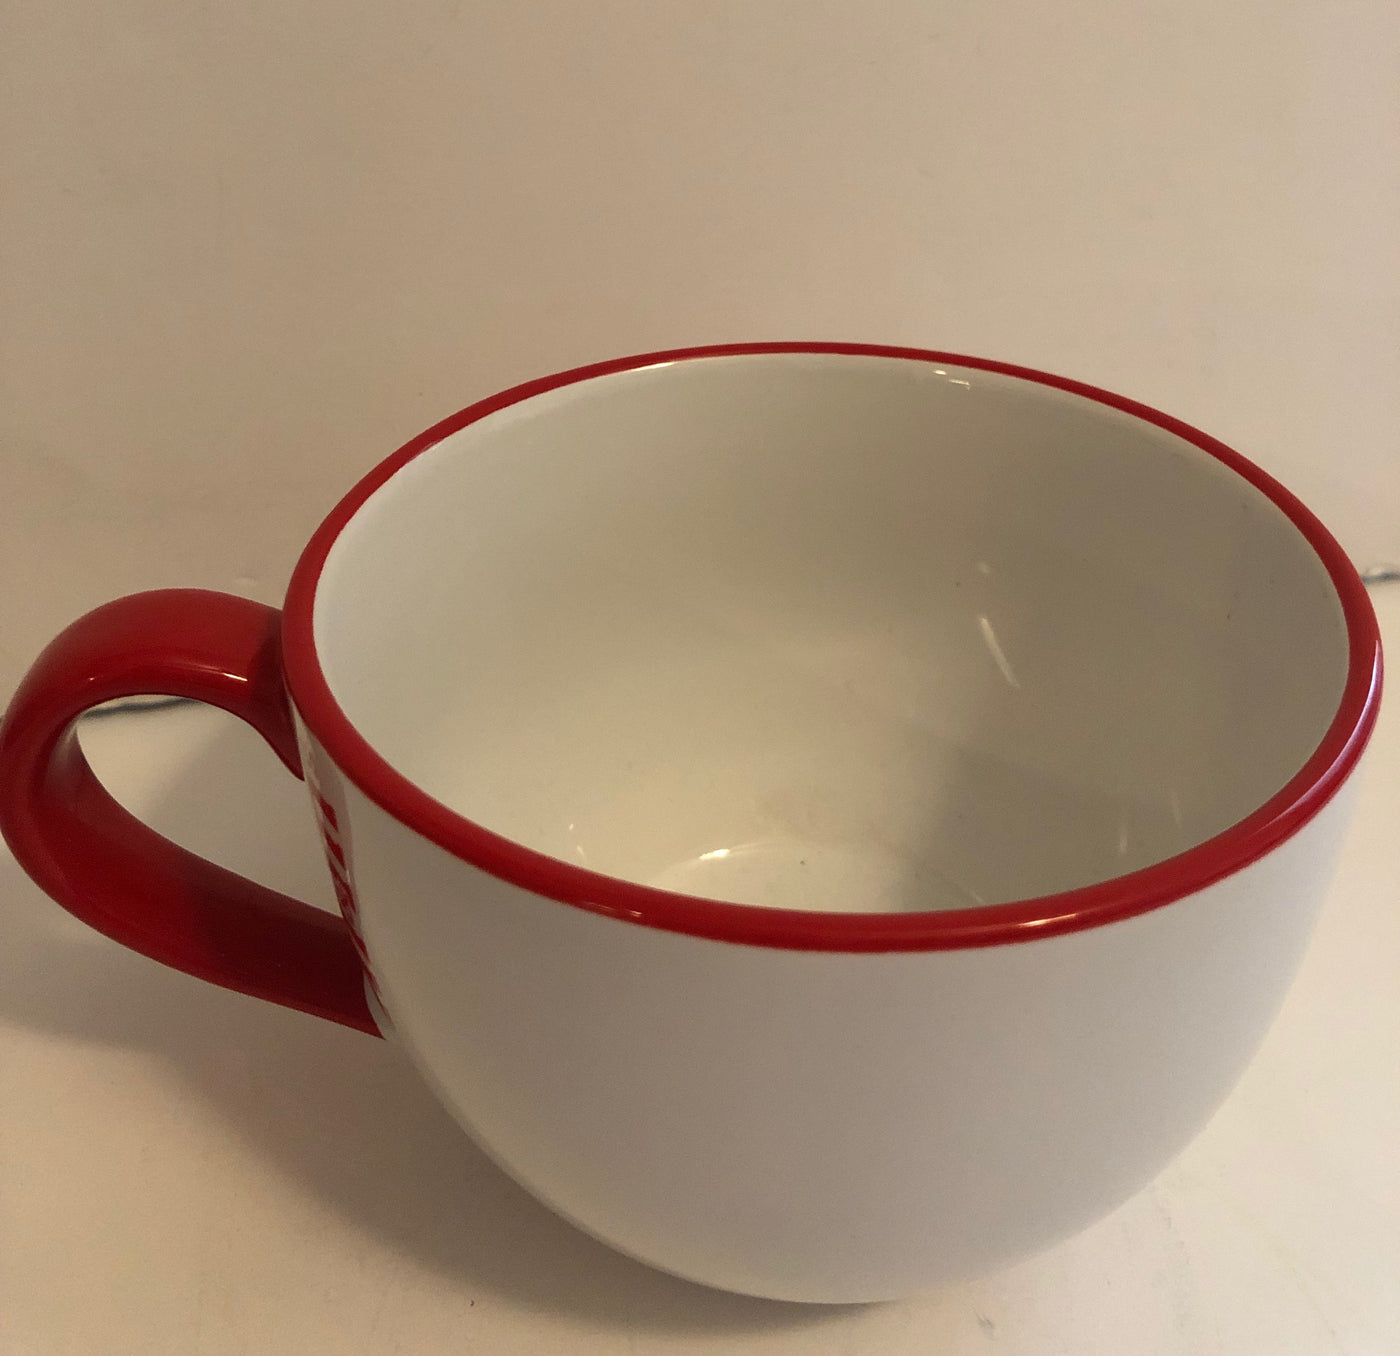 M&M's World Red Character Cappuccino Ceramic Mug New